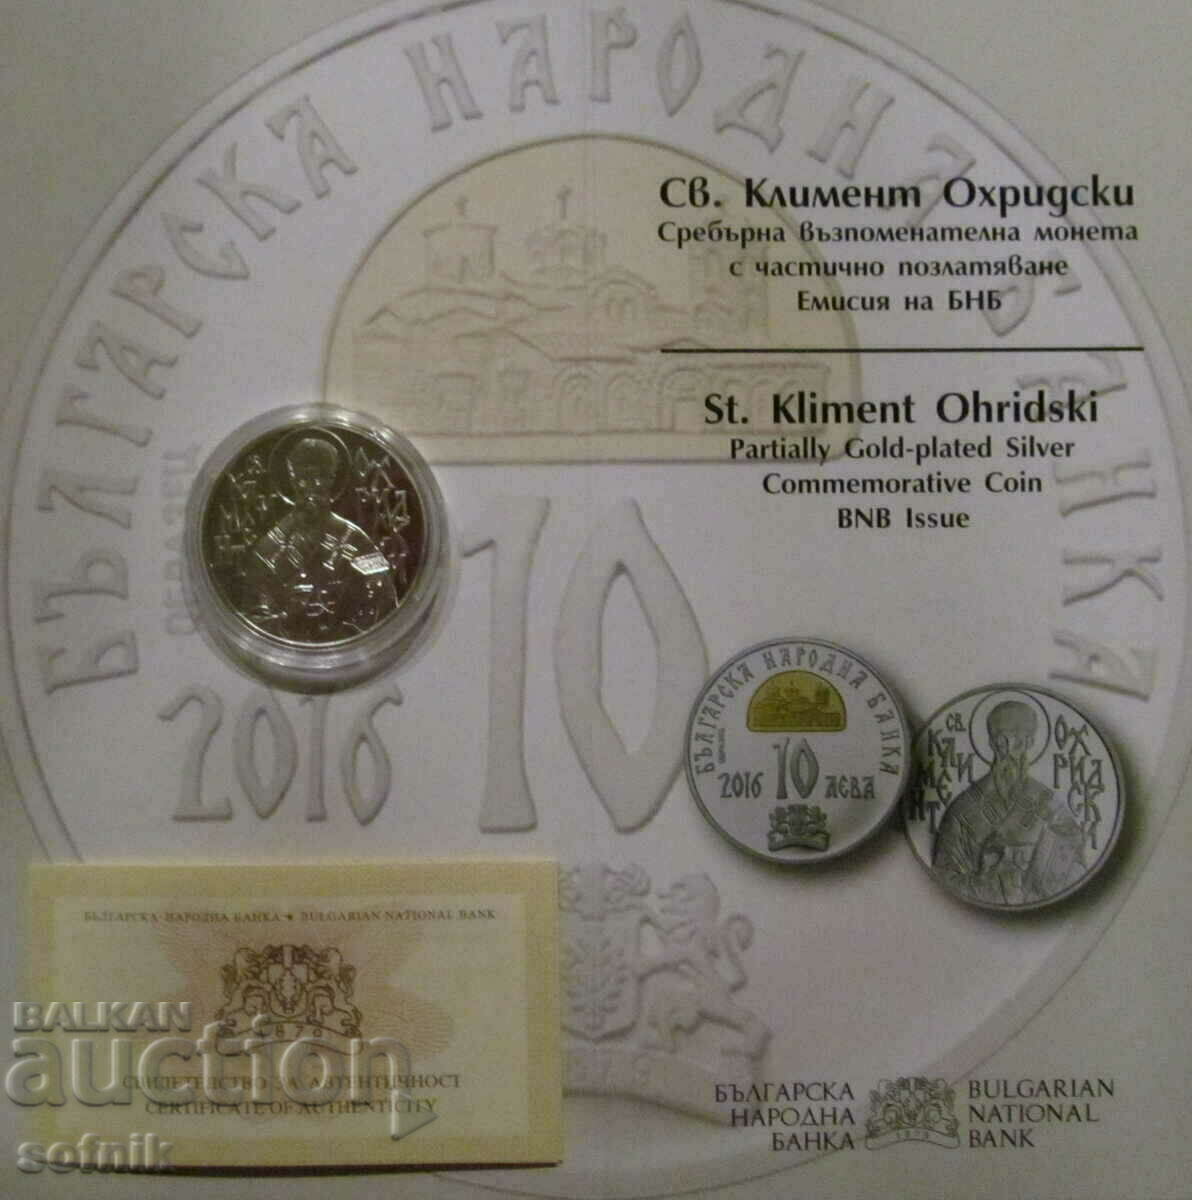 BGN 10, 2016 "St. Kliment Ohridski"